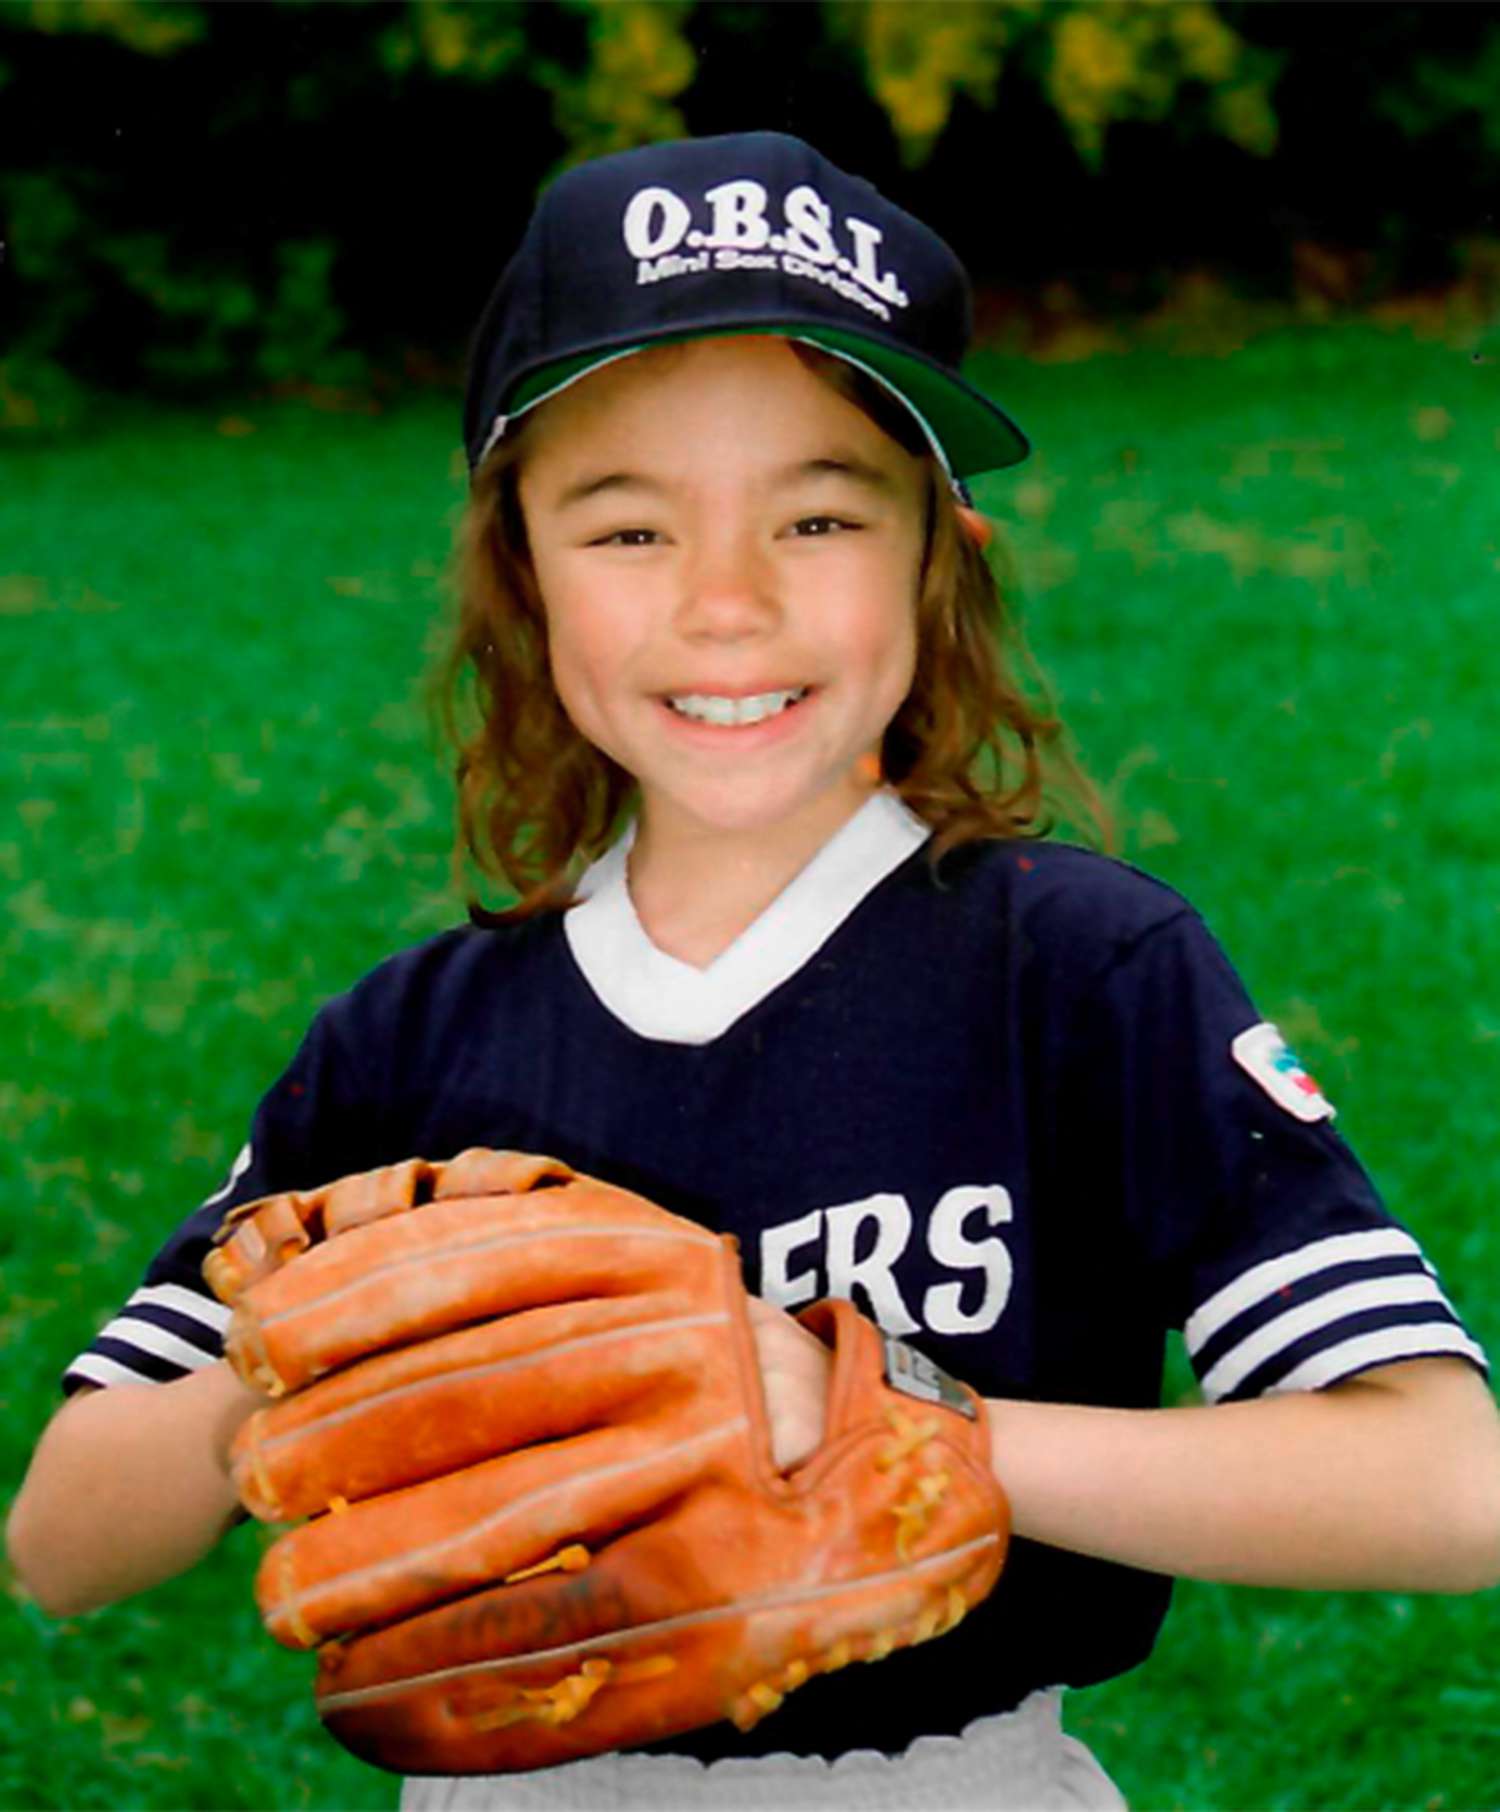 Nicole Shanahan photos Softball: Oakland Bobbysox Softball picture - 1997. 7 years old